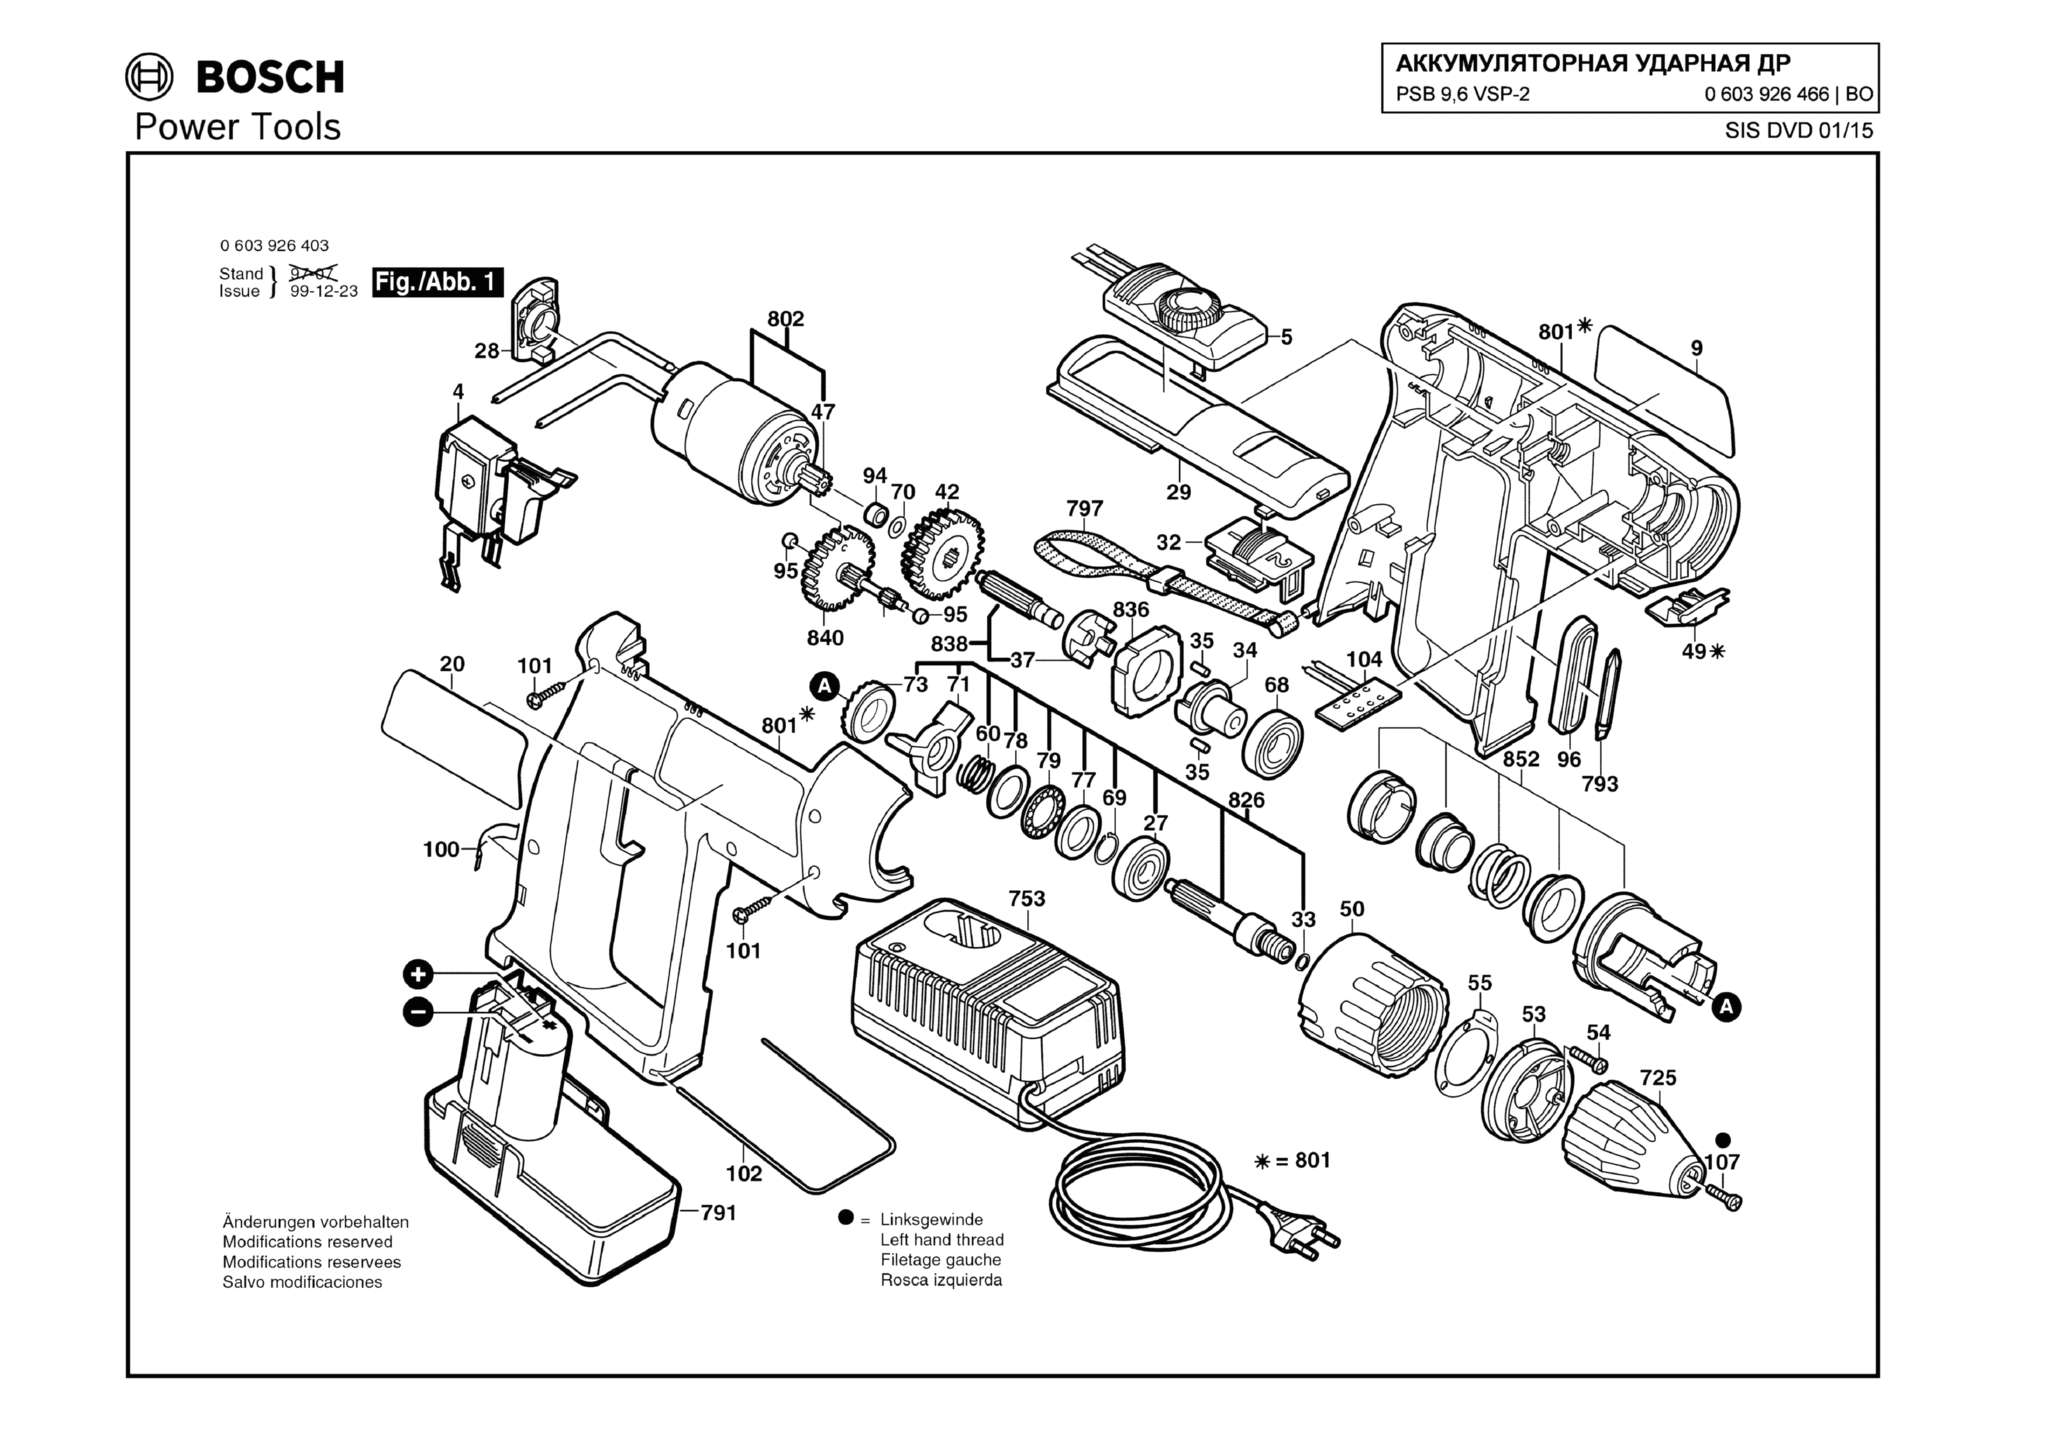 Запчасти, схема и деталировка Bosch PSB 9,6 VSP-2 (ТИП 0603926466)